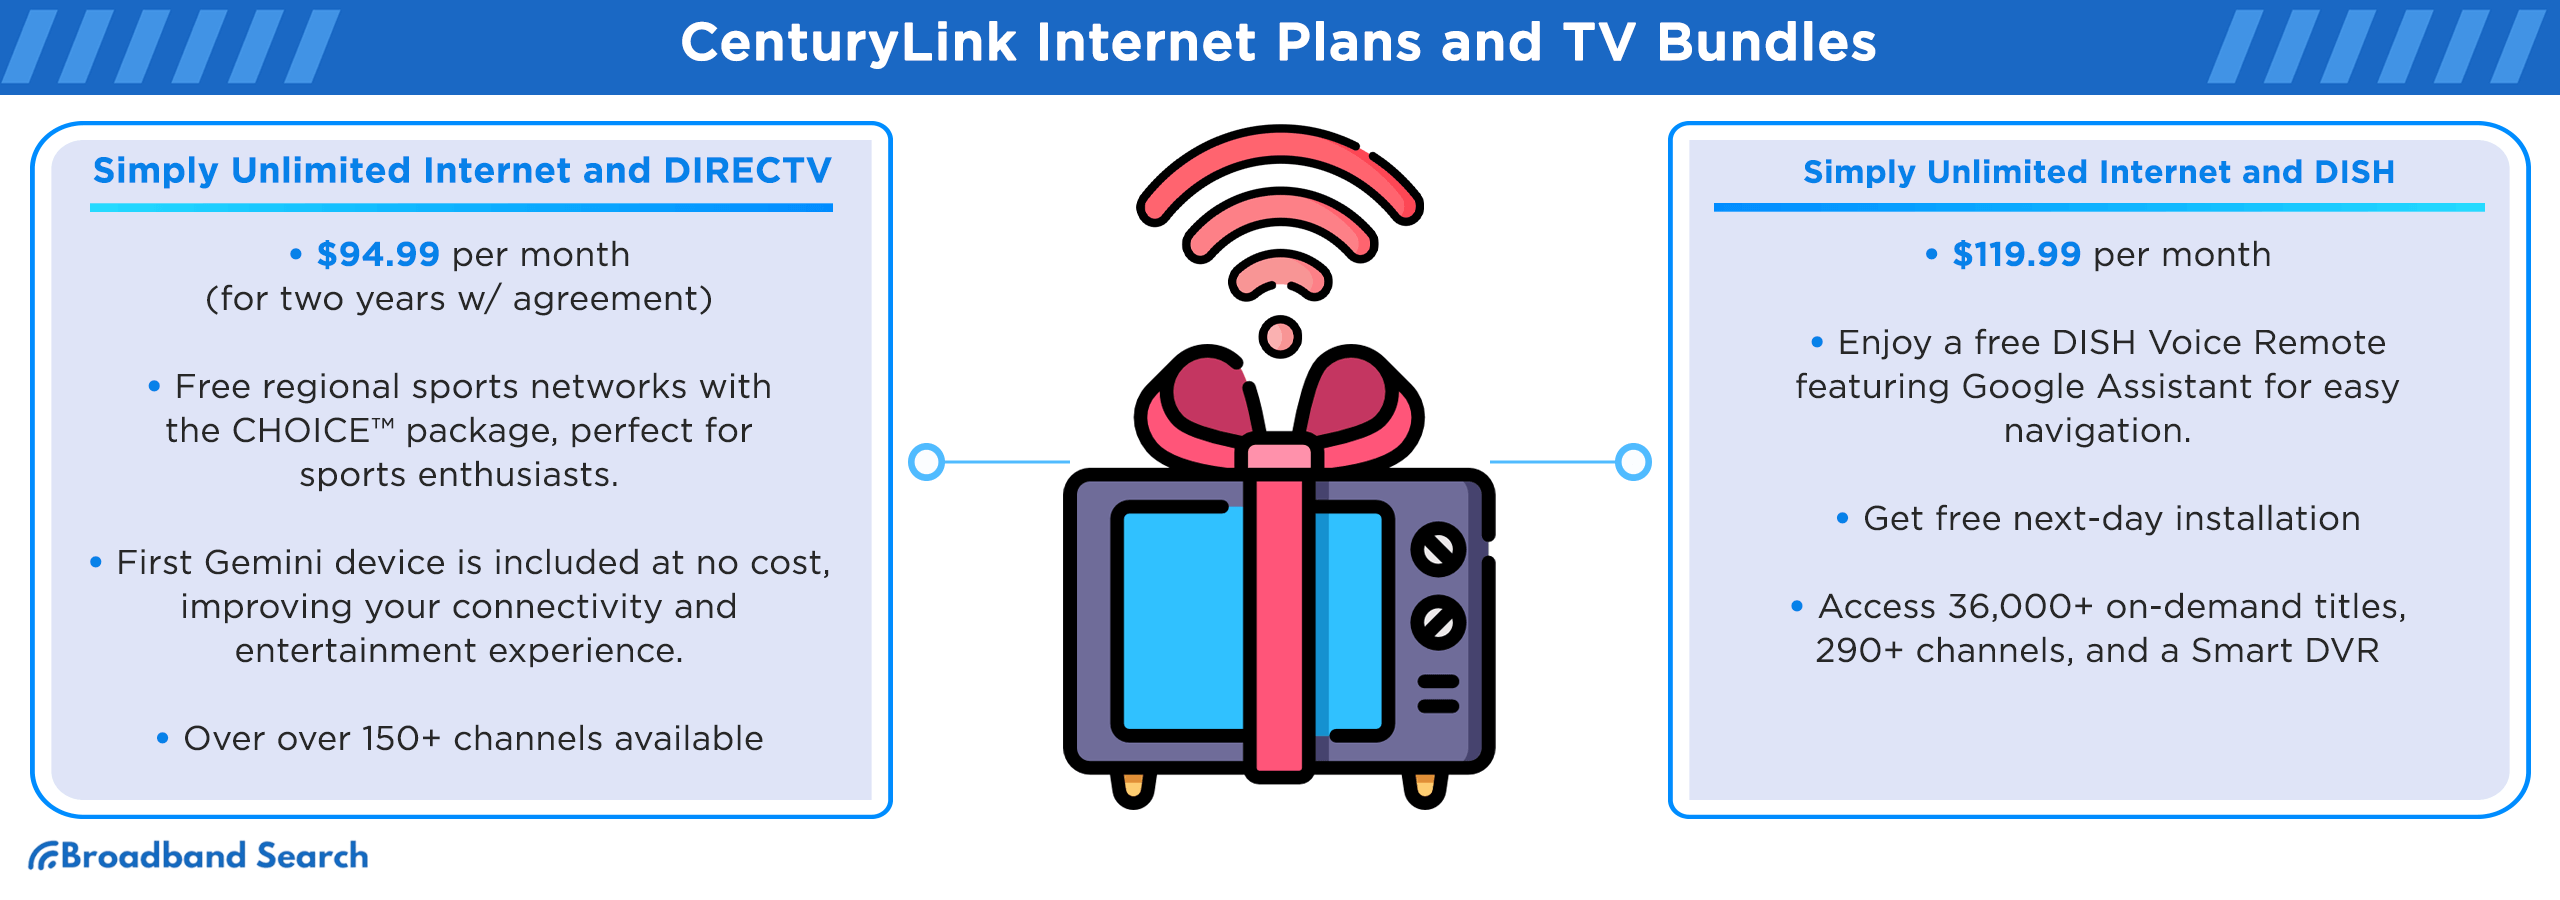 Centurylink Internet Plans and TV Bundles